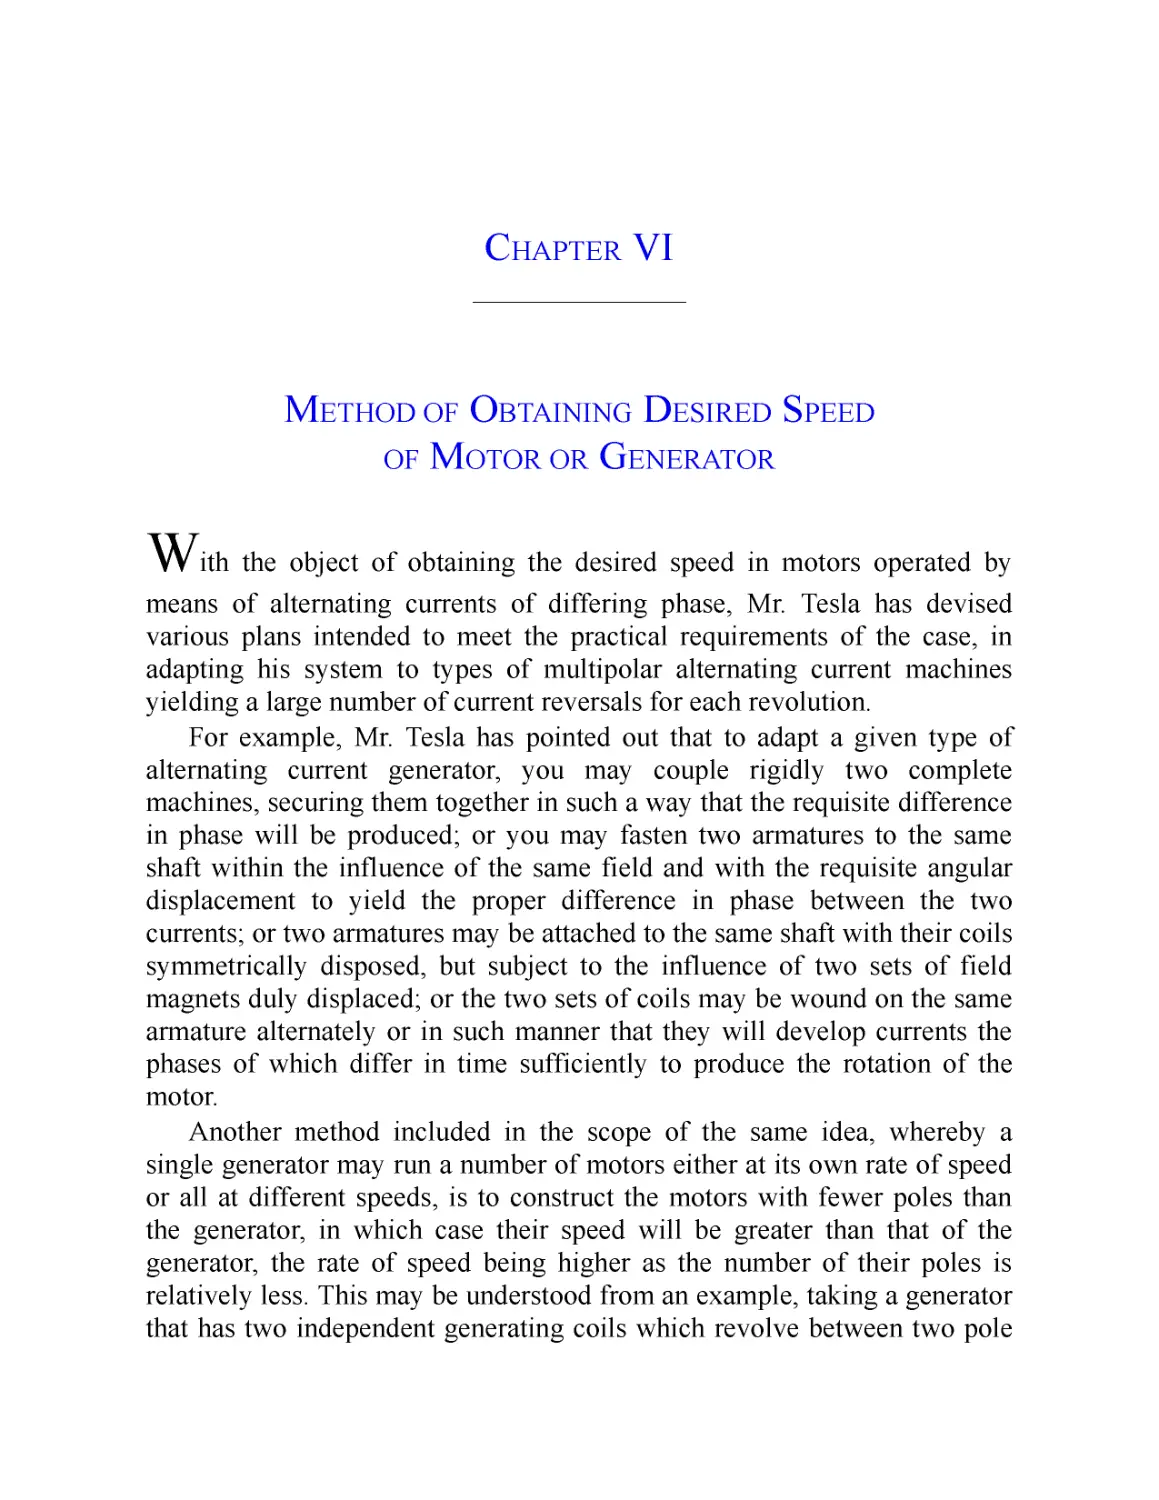 ﻿Chapter VI: Method of Obtaining Desired Speed of Motor or Generato